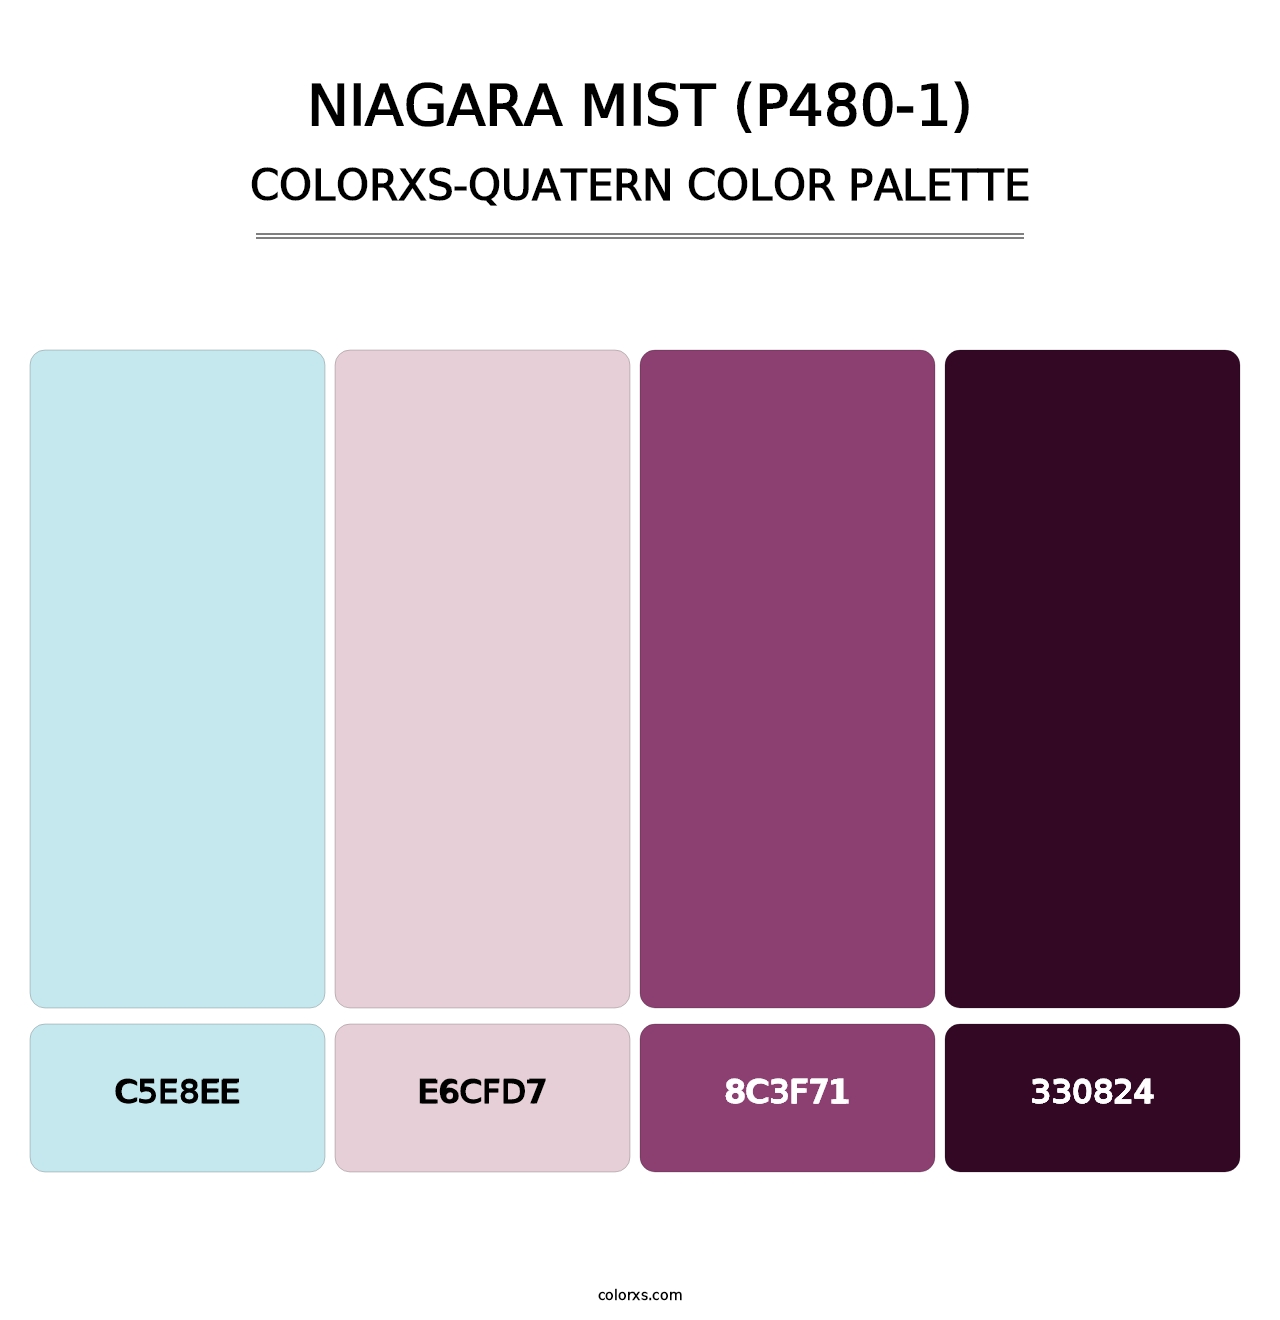 Niagara Mist (P480-1) - Colorxs Quatern Palette